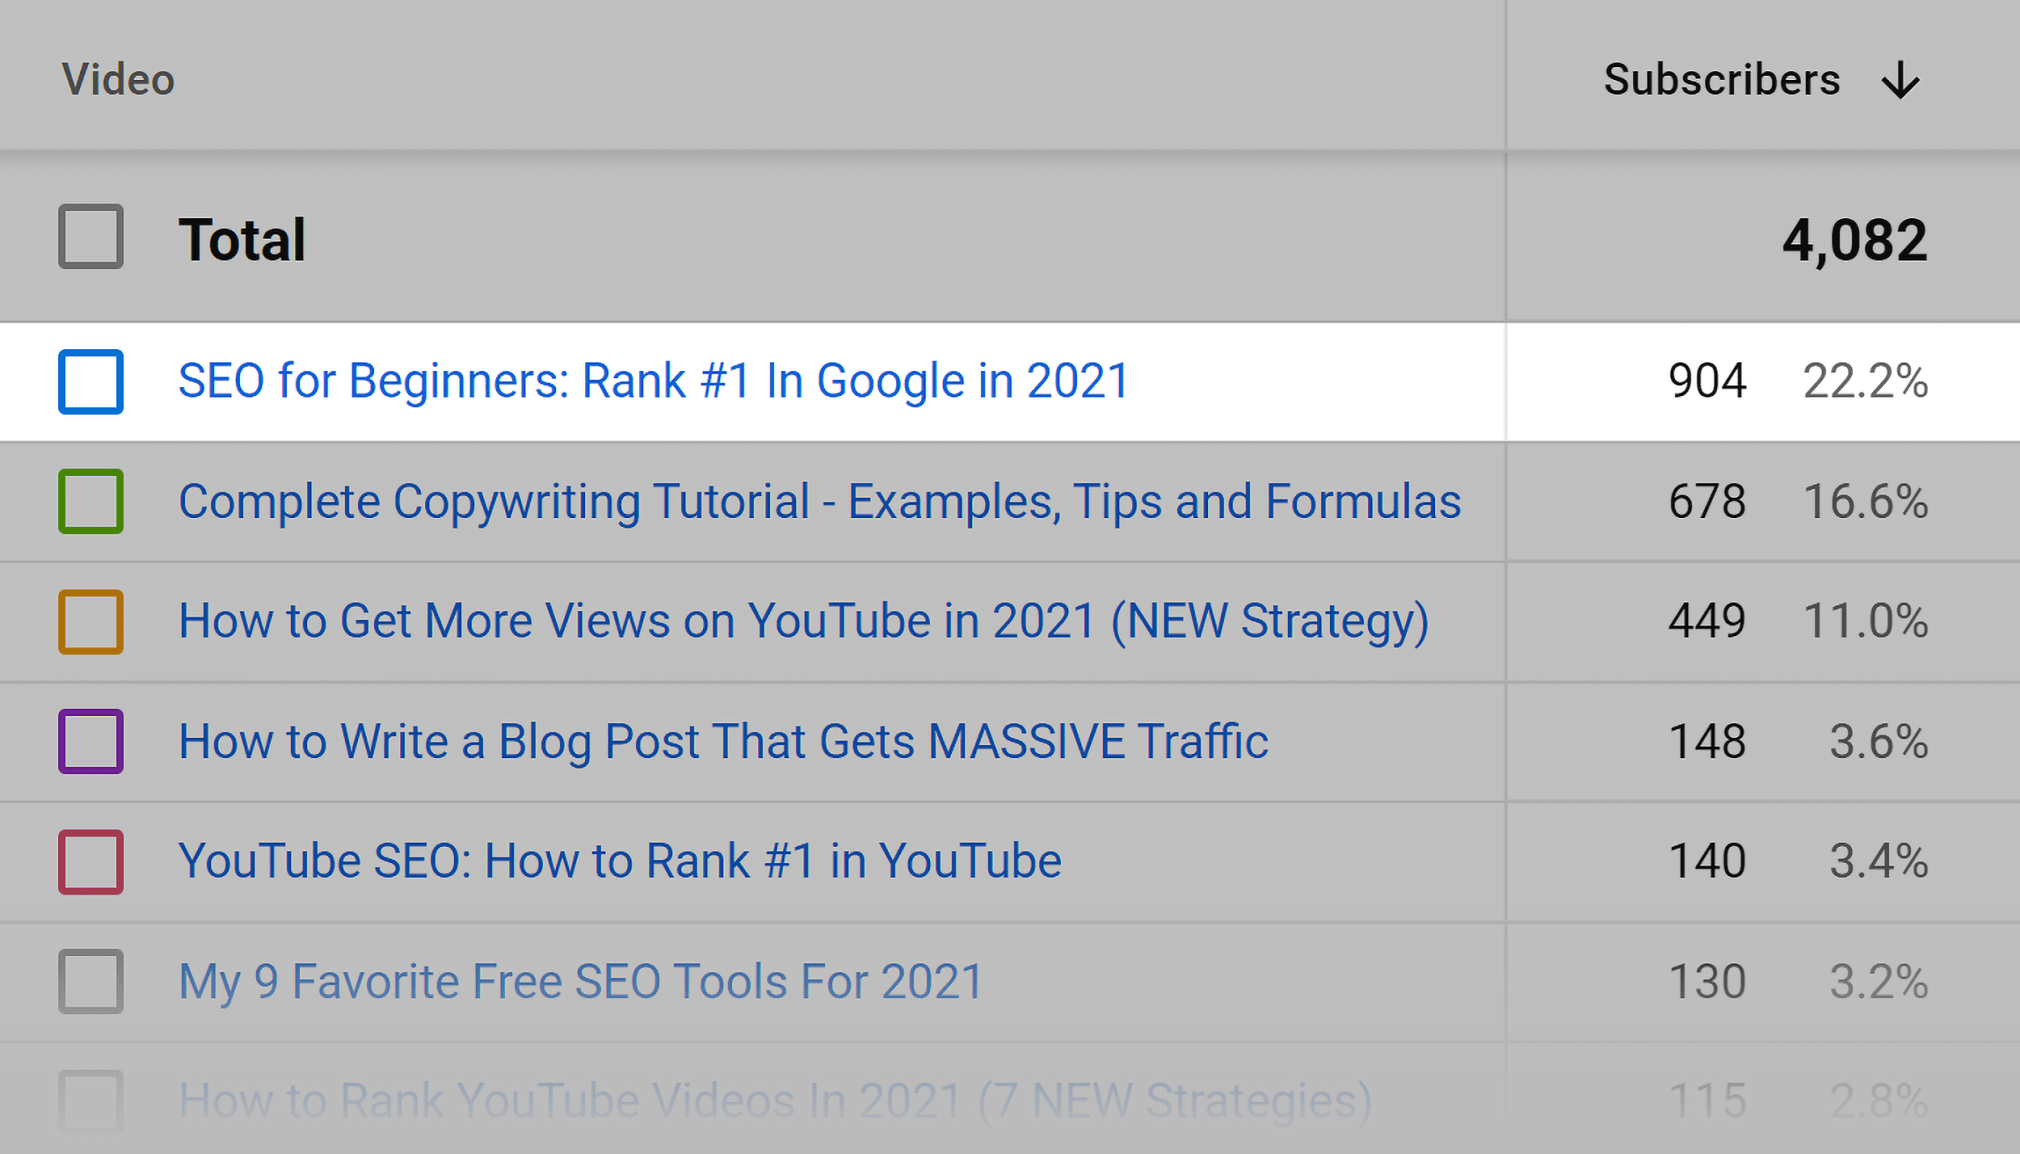 YouTube analytics – Subscribers – Top video